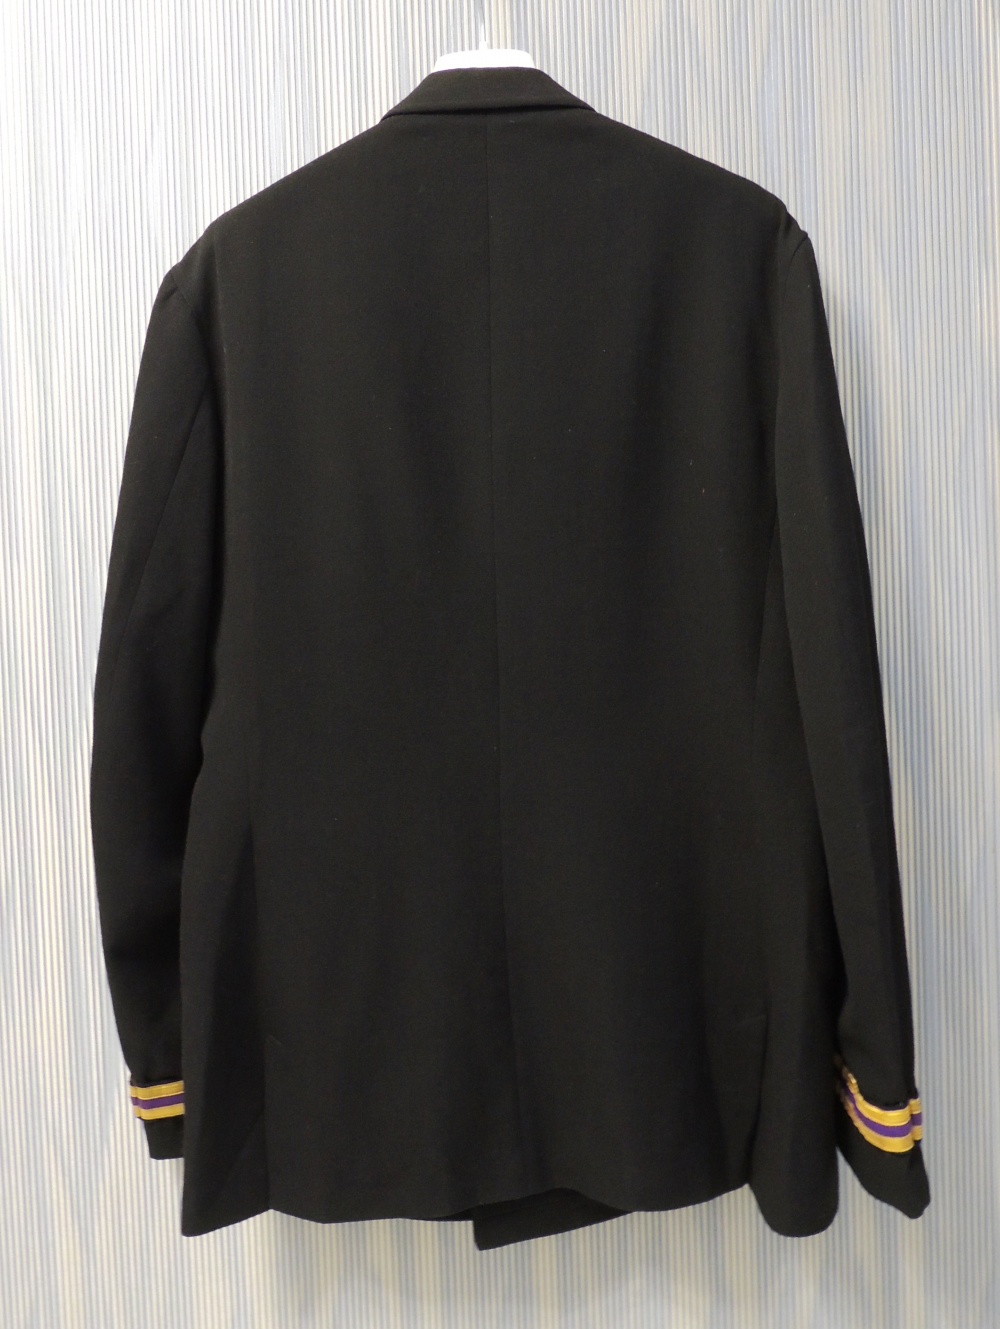 Пиджак Cutlass. 46-48 размер